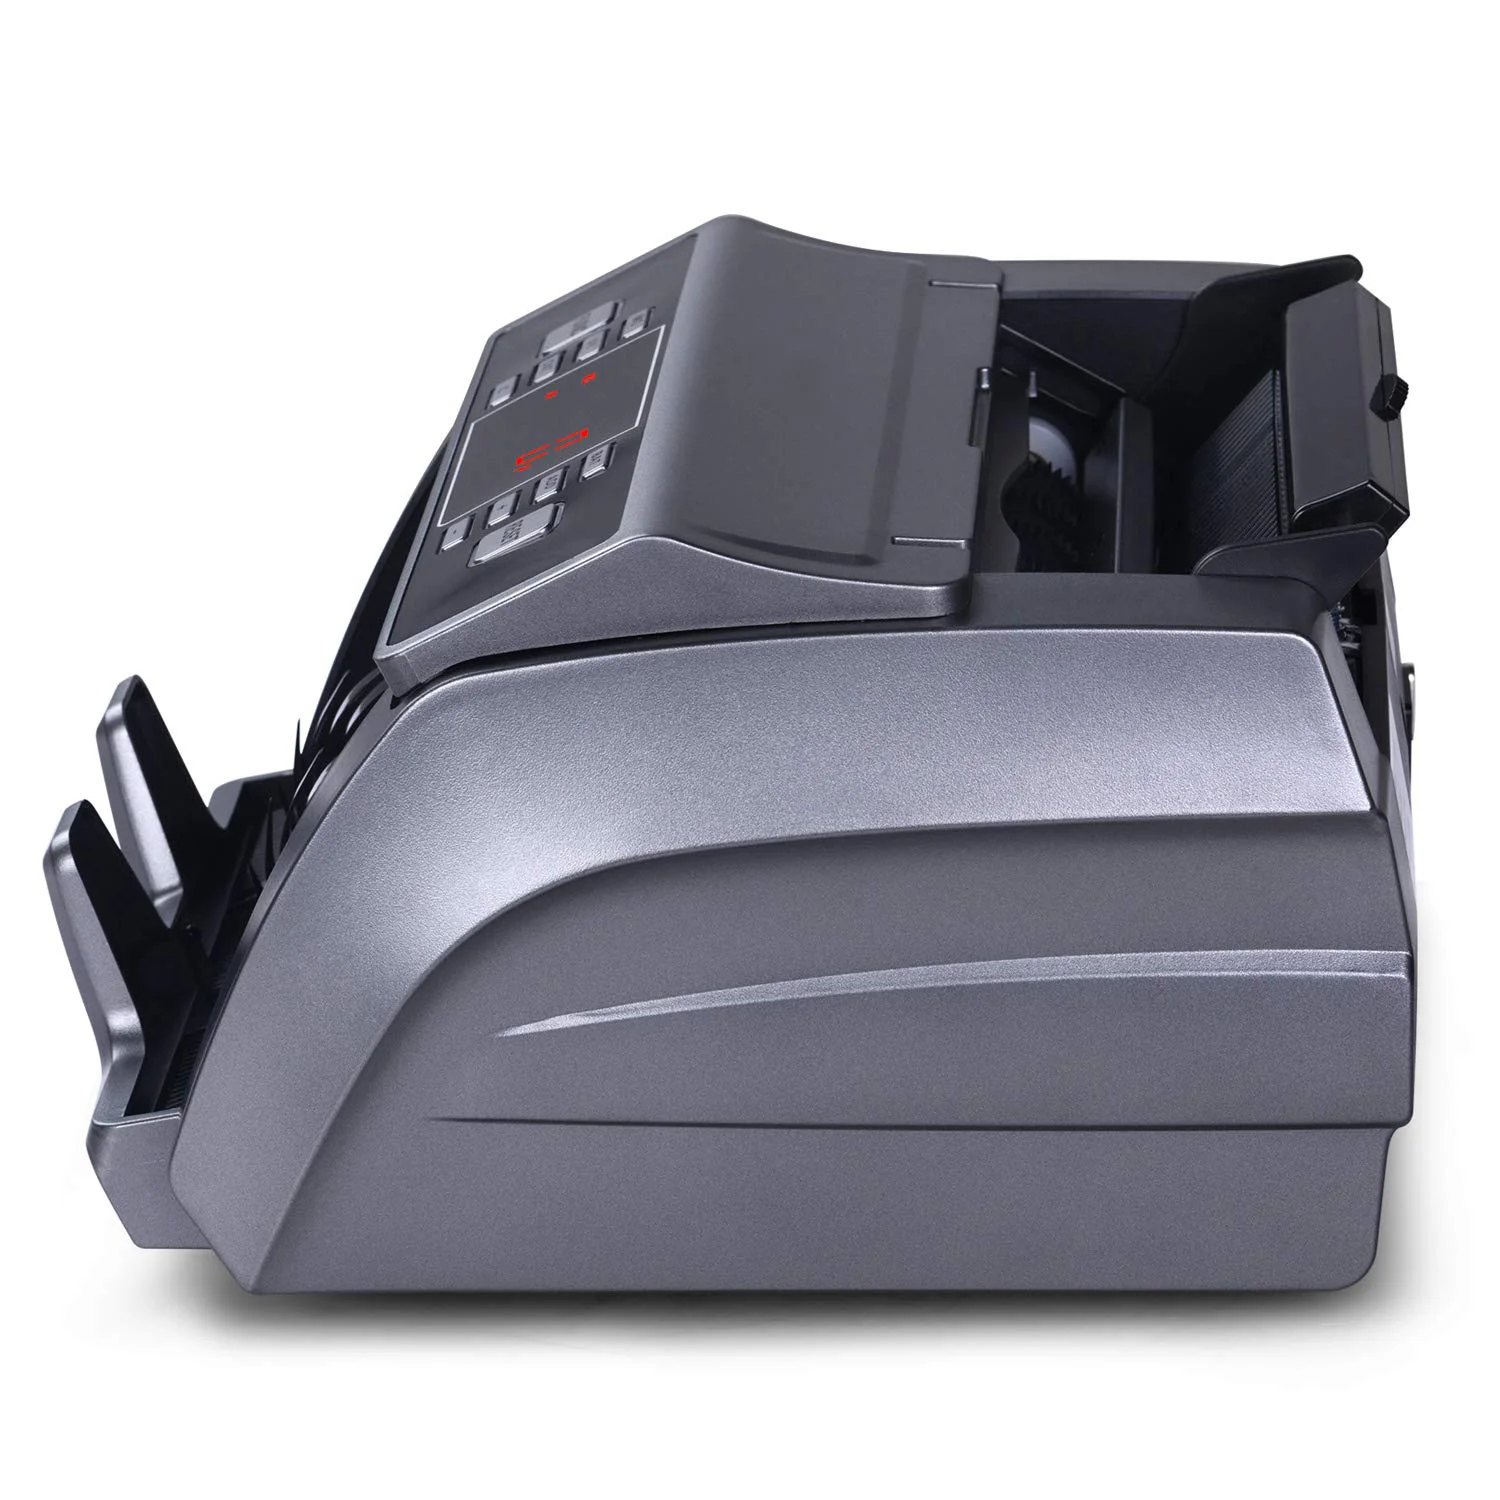 
UNION WL-C09 portable automatic money counting machine mini banknote cash counter machine 